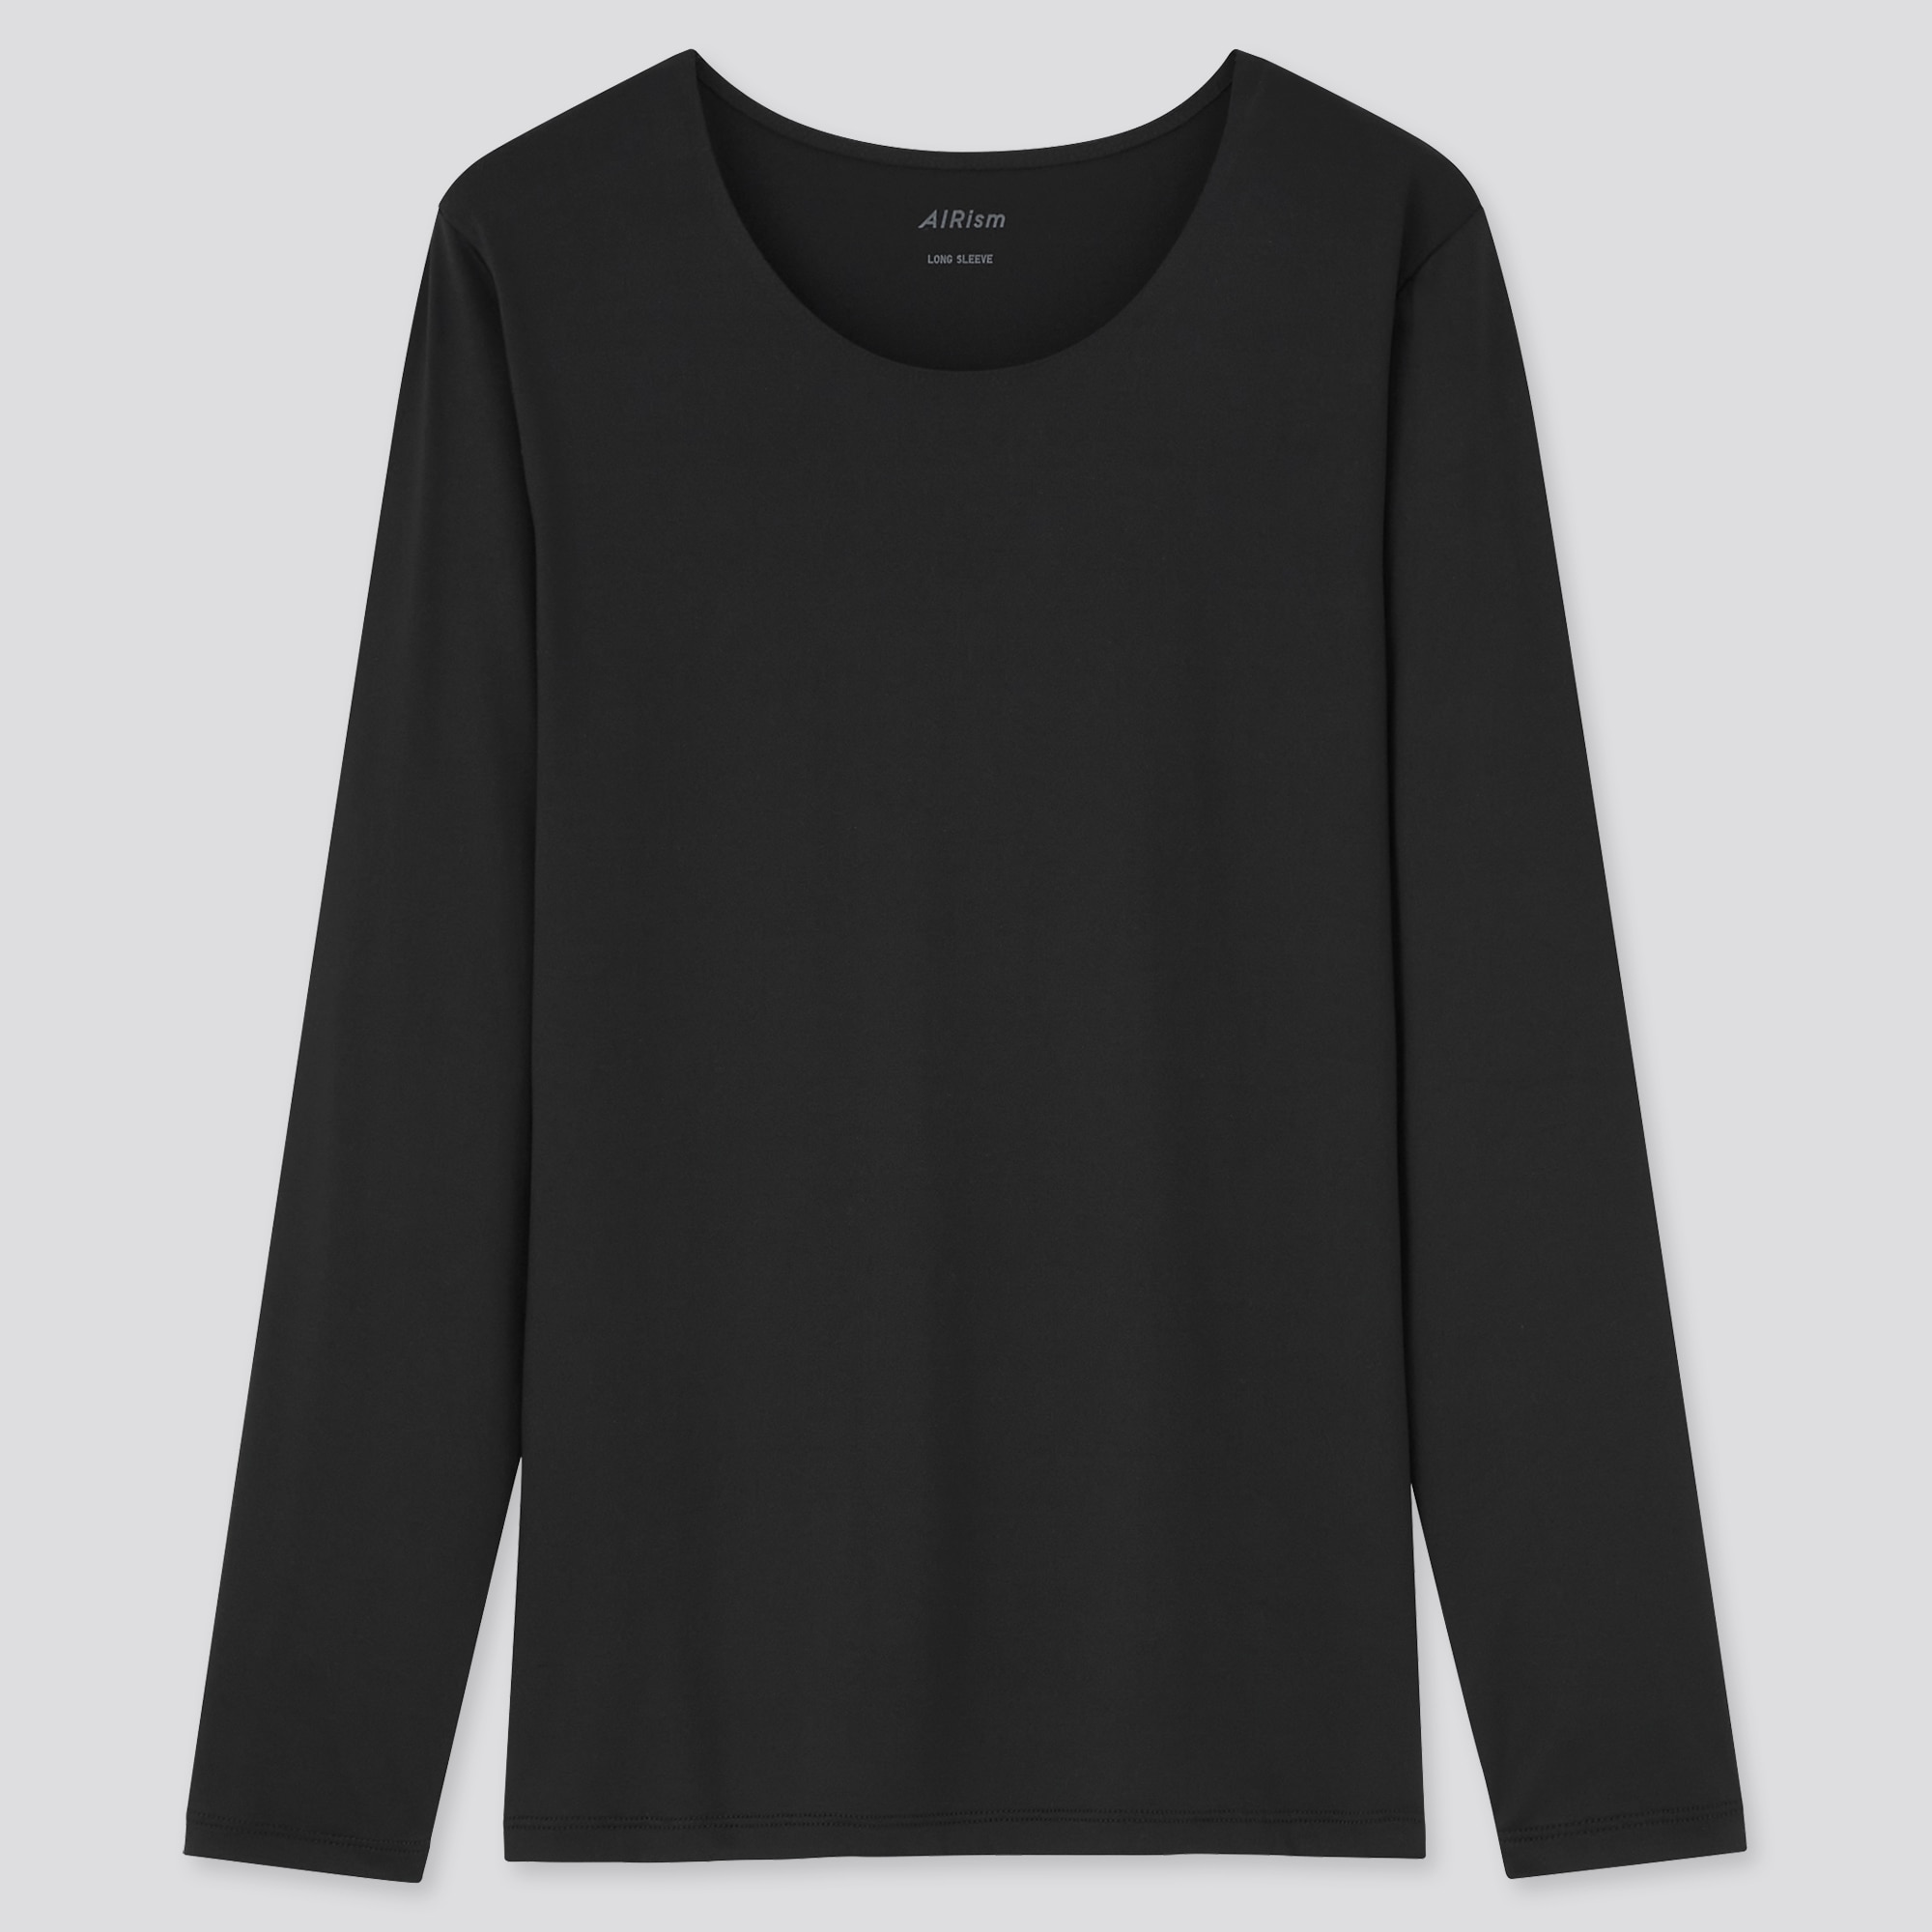 Chia sẻ 85 black uniqlo shirt tuyệt vời nhất  trieuson5